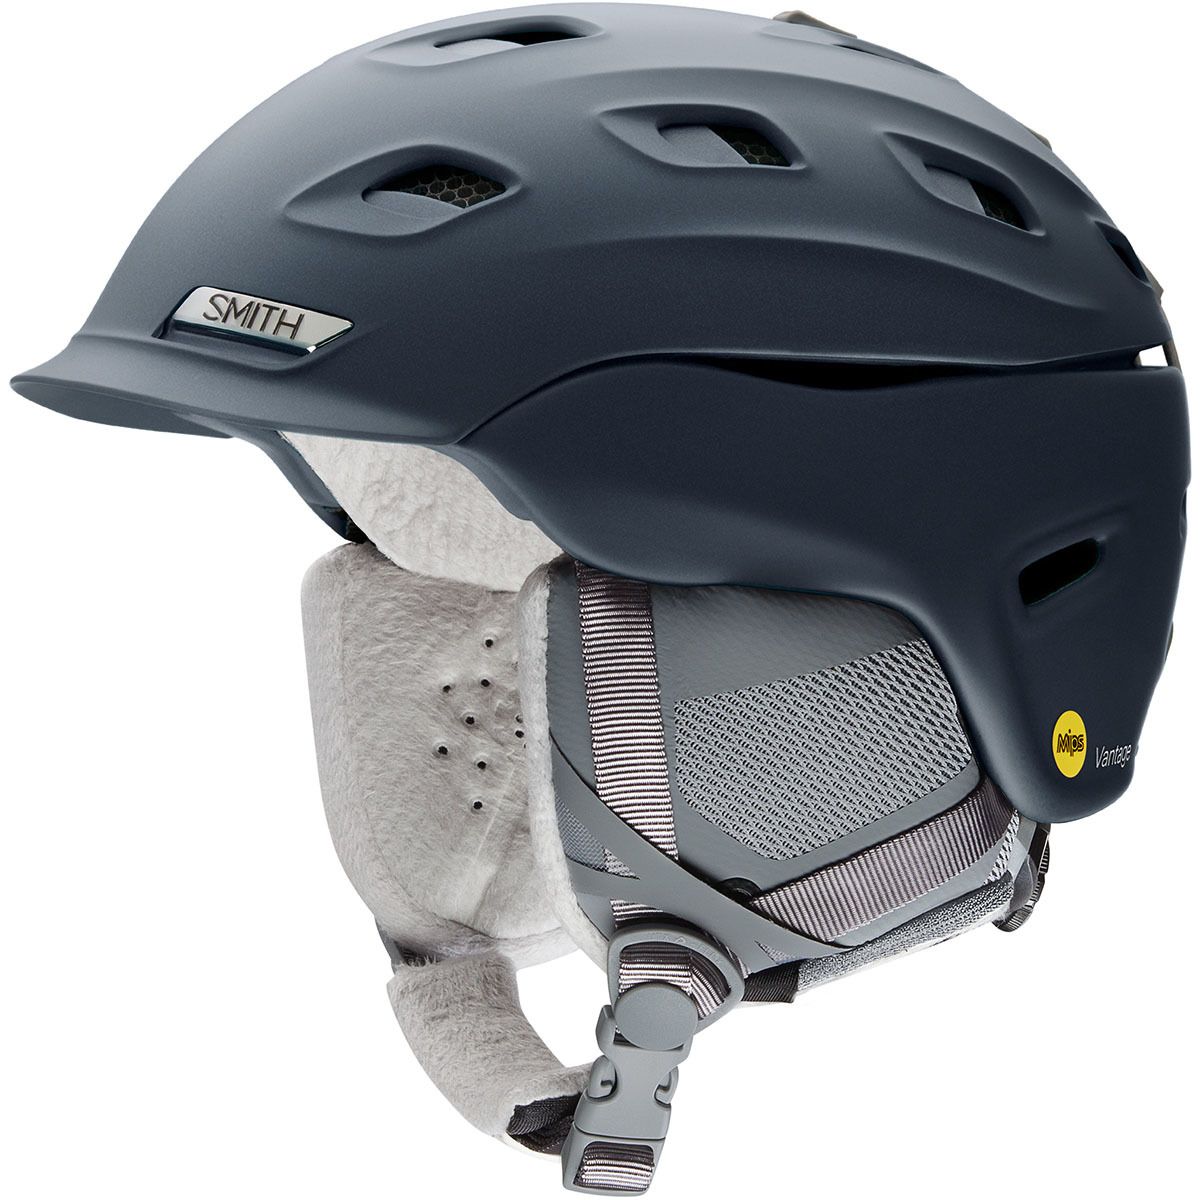 Smith Vantage 2018 MIPS Helmet Women's Matte White Small for sale online 